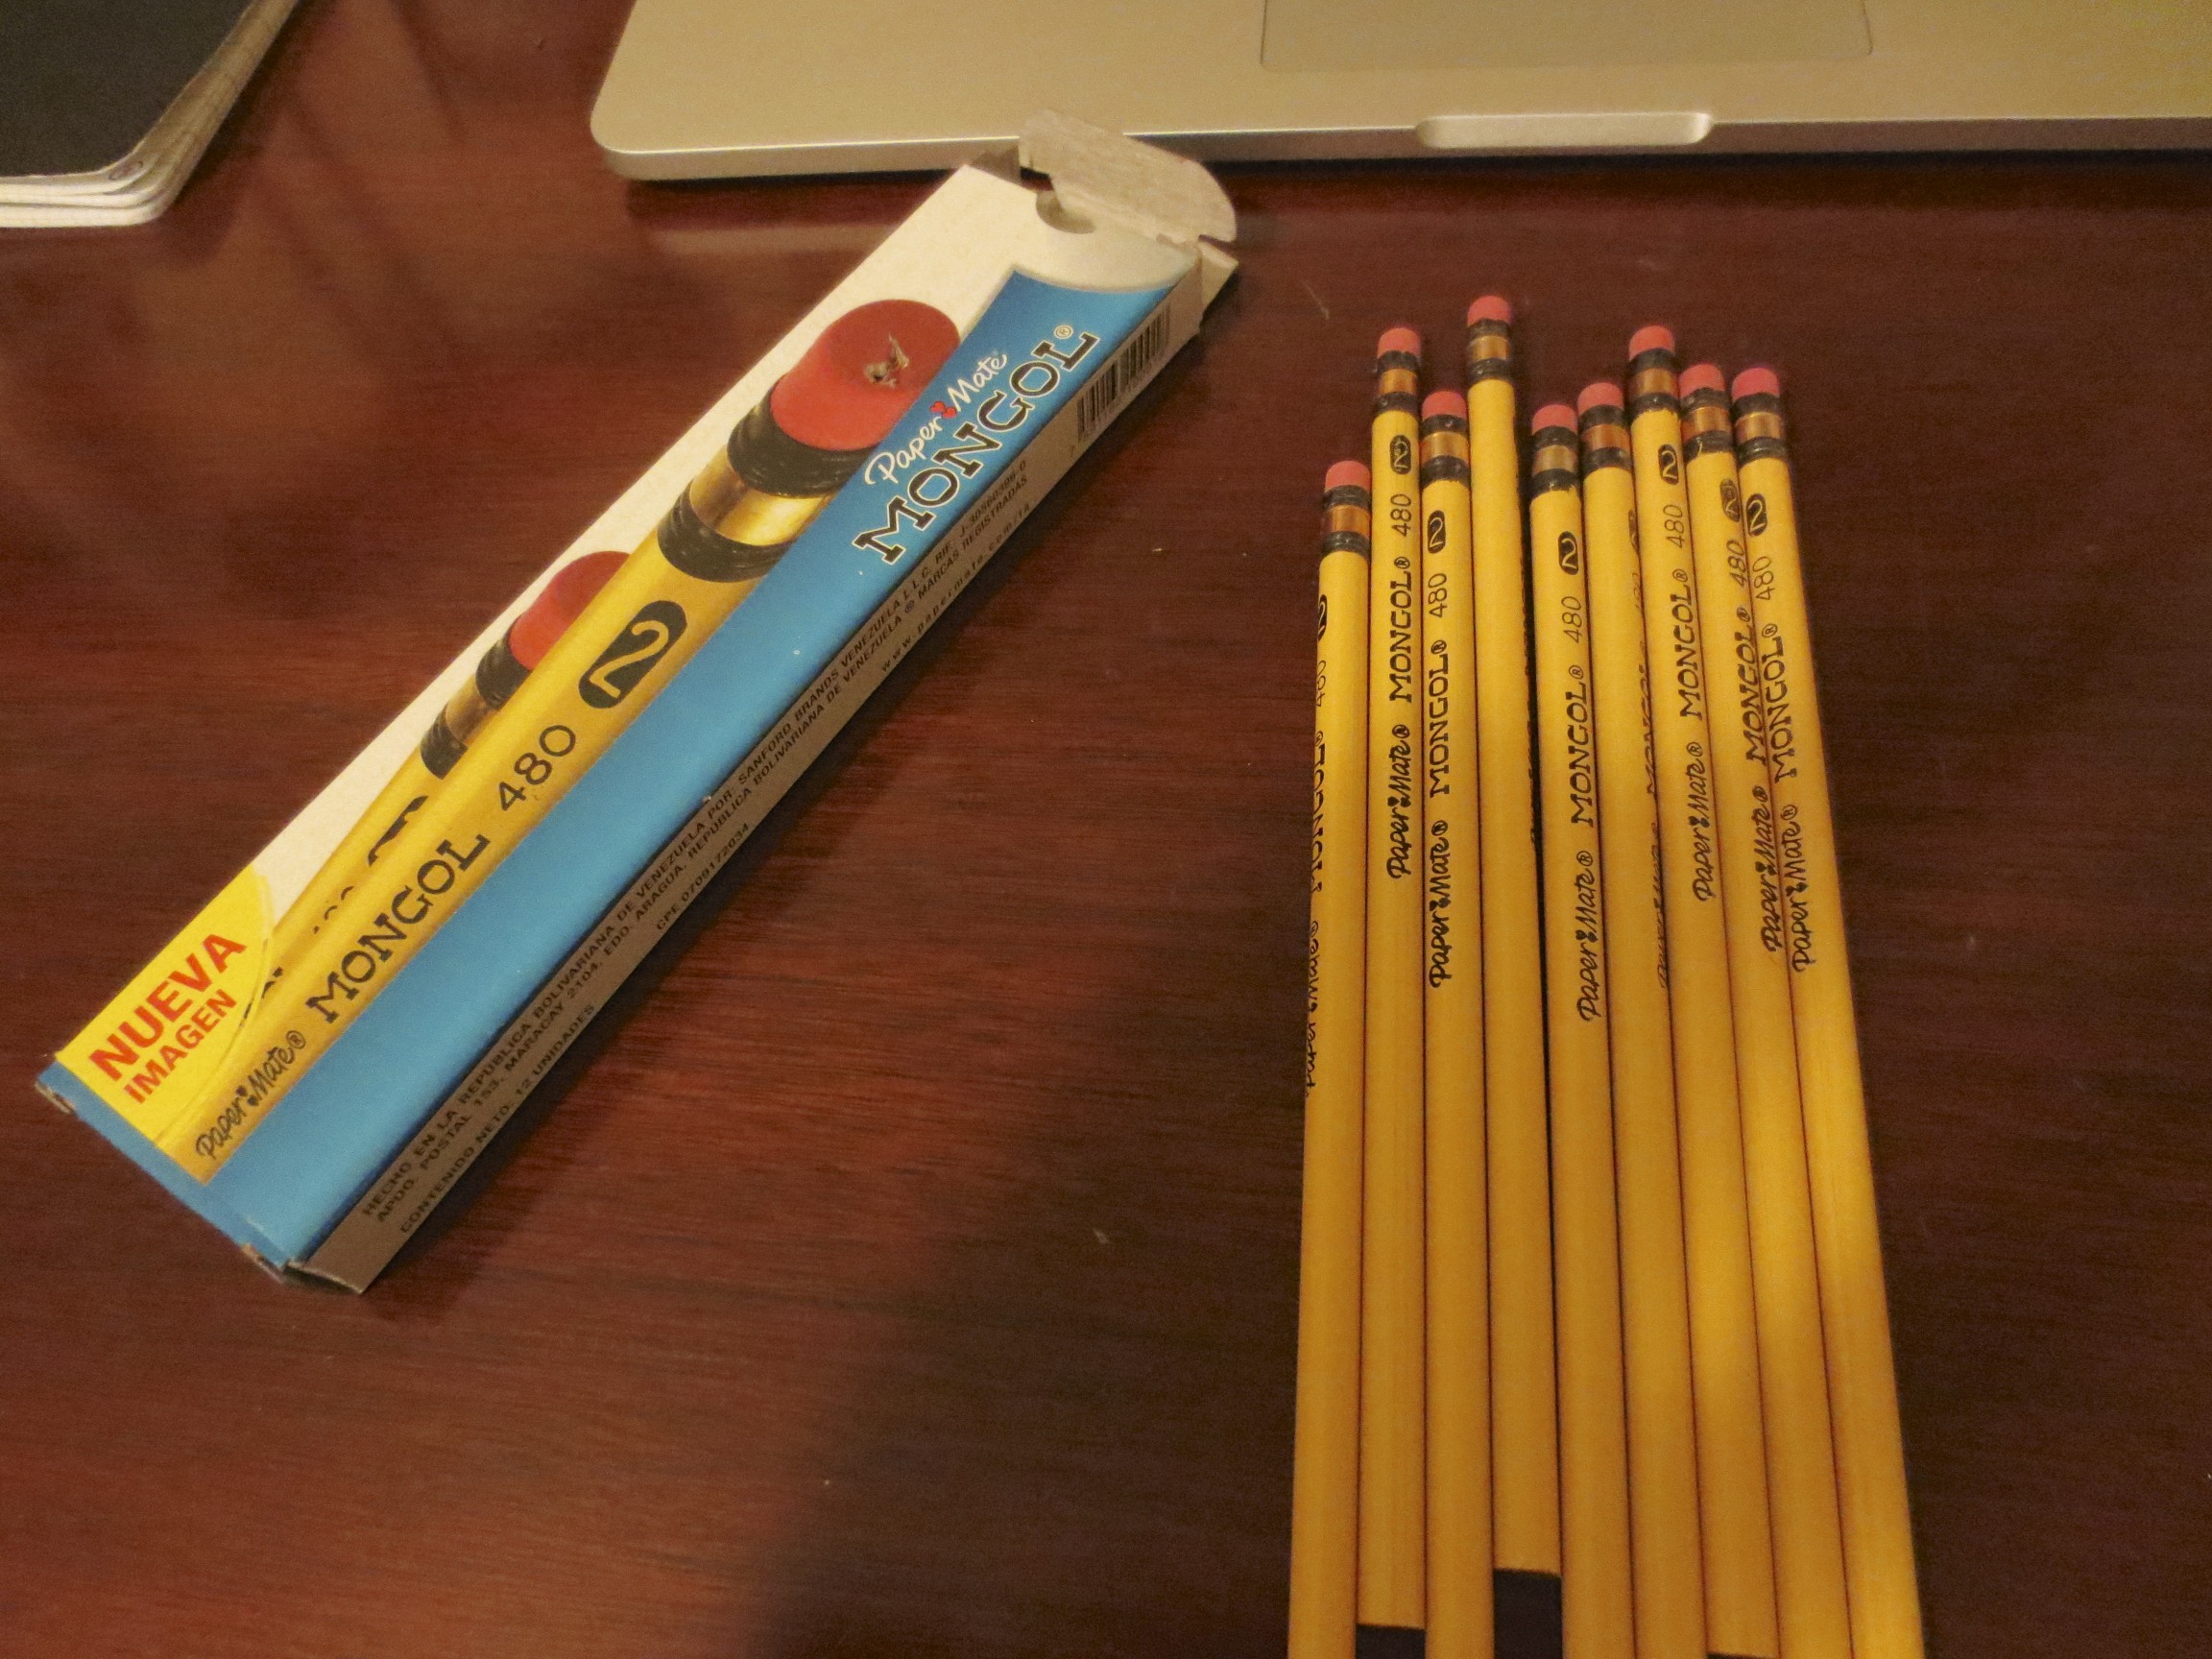 General Pencil Cedar Pointe Graphite Pencils W/Sharpener 5/Pkg